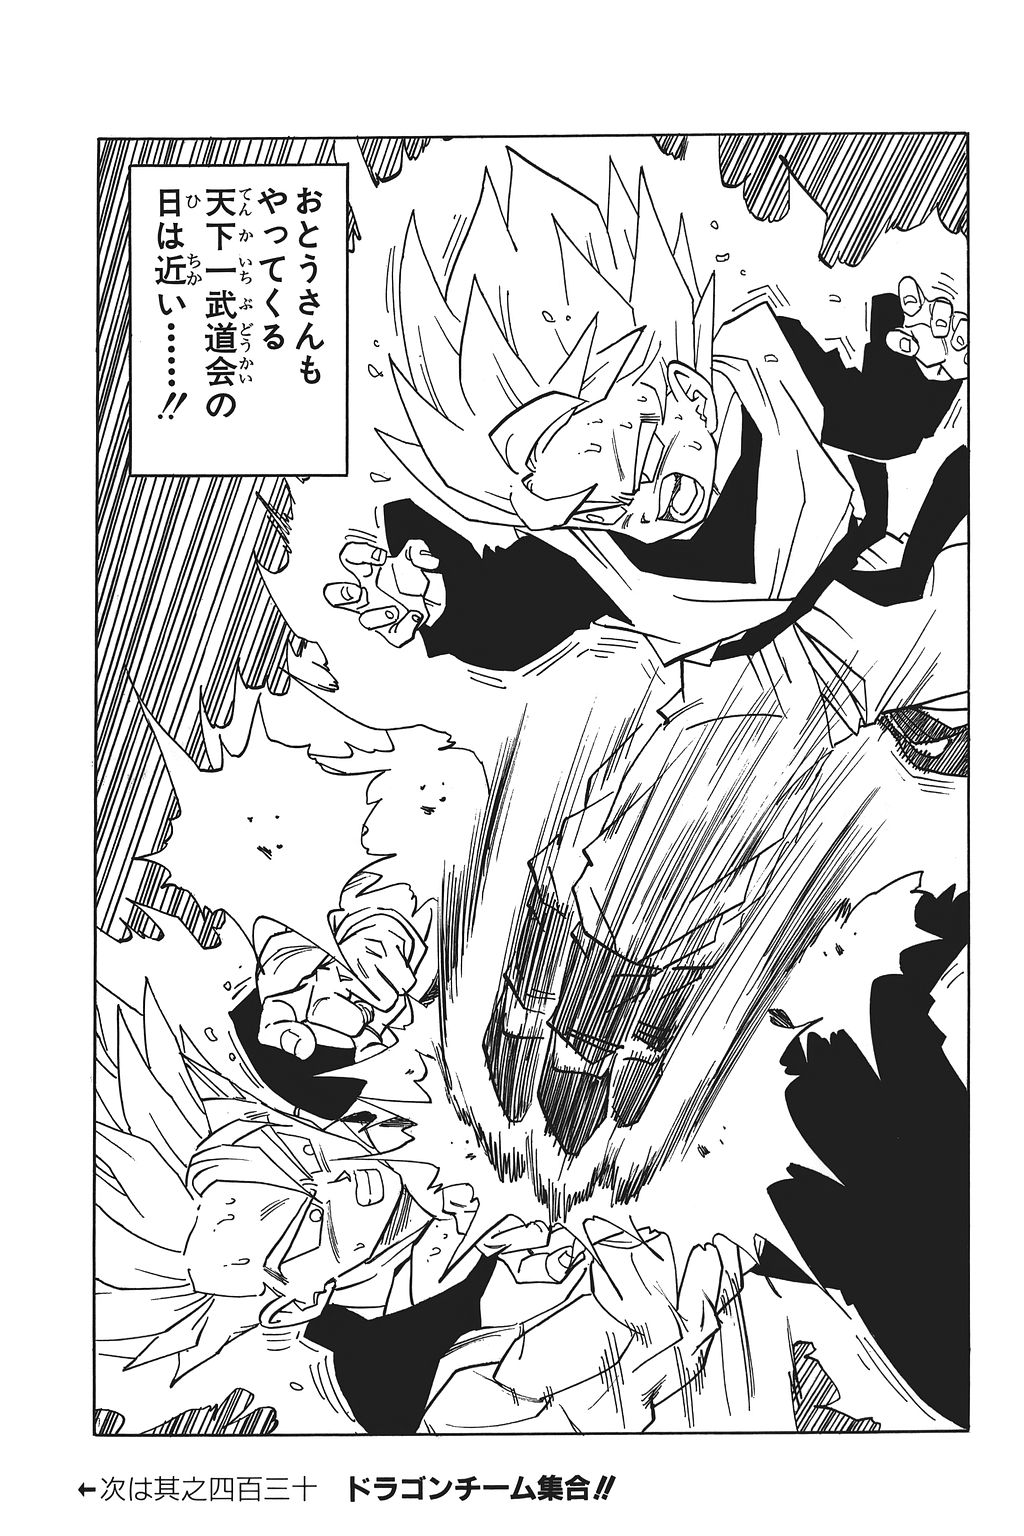 Why didnt Vegeta go SSJ2 against Kid Buu on Kaioshin Planet? • Kanzenshuu